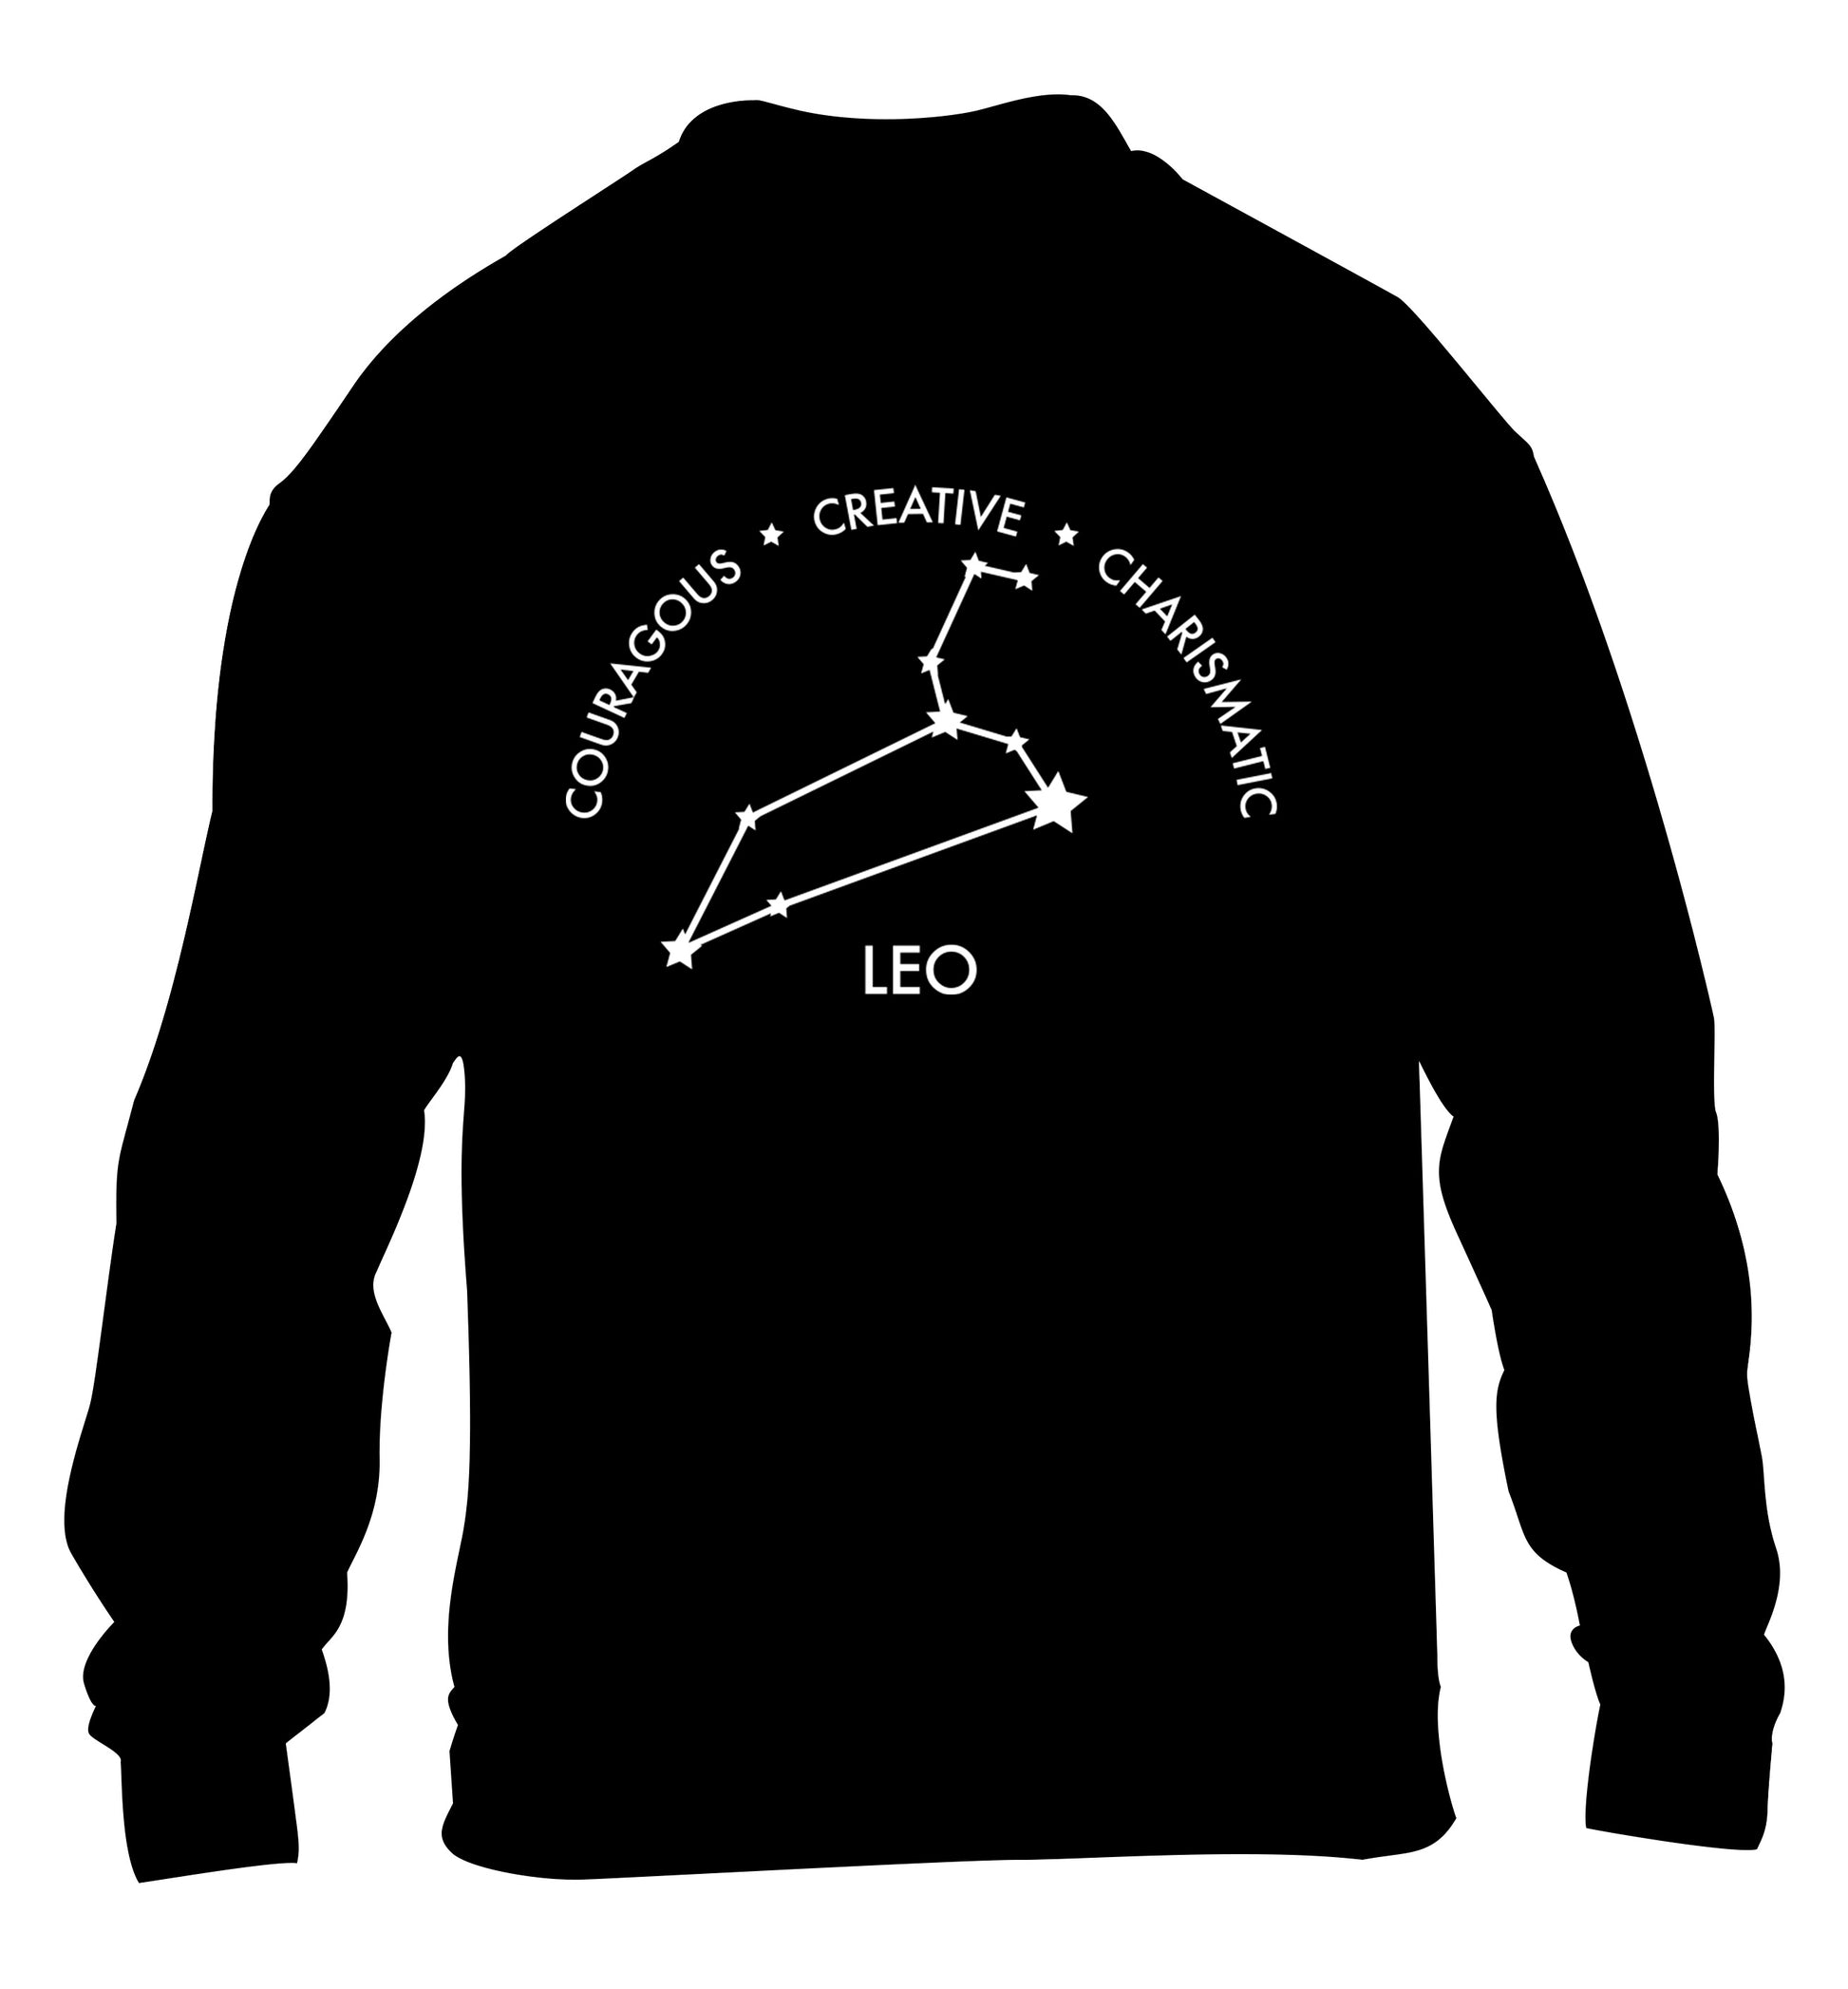 Leo - Courageous | Creative | Charismatic children's black sweater 12-13 Years